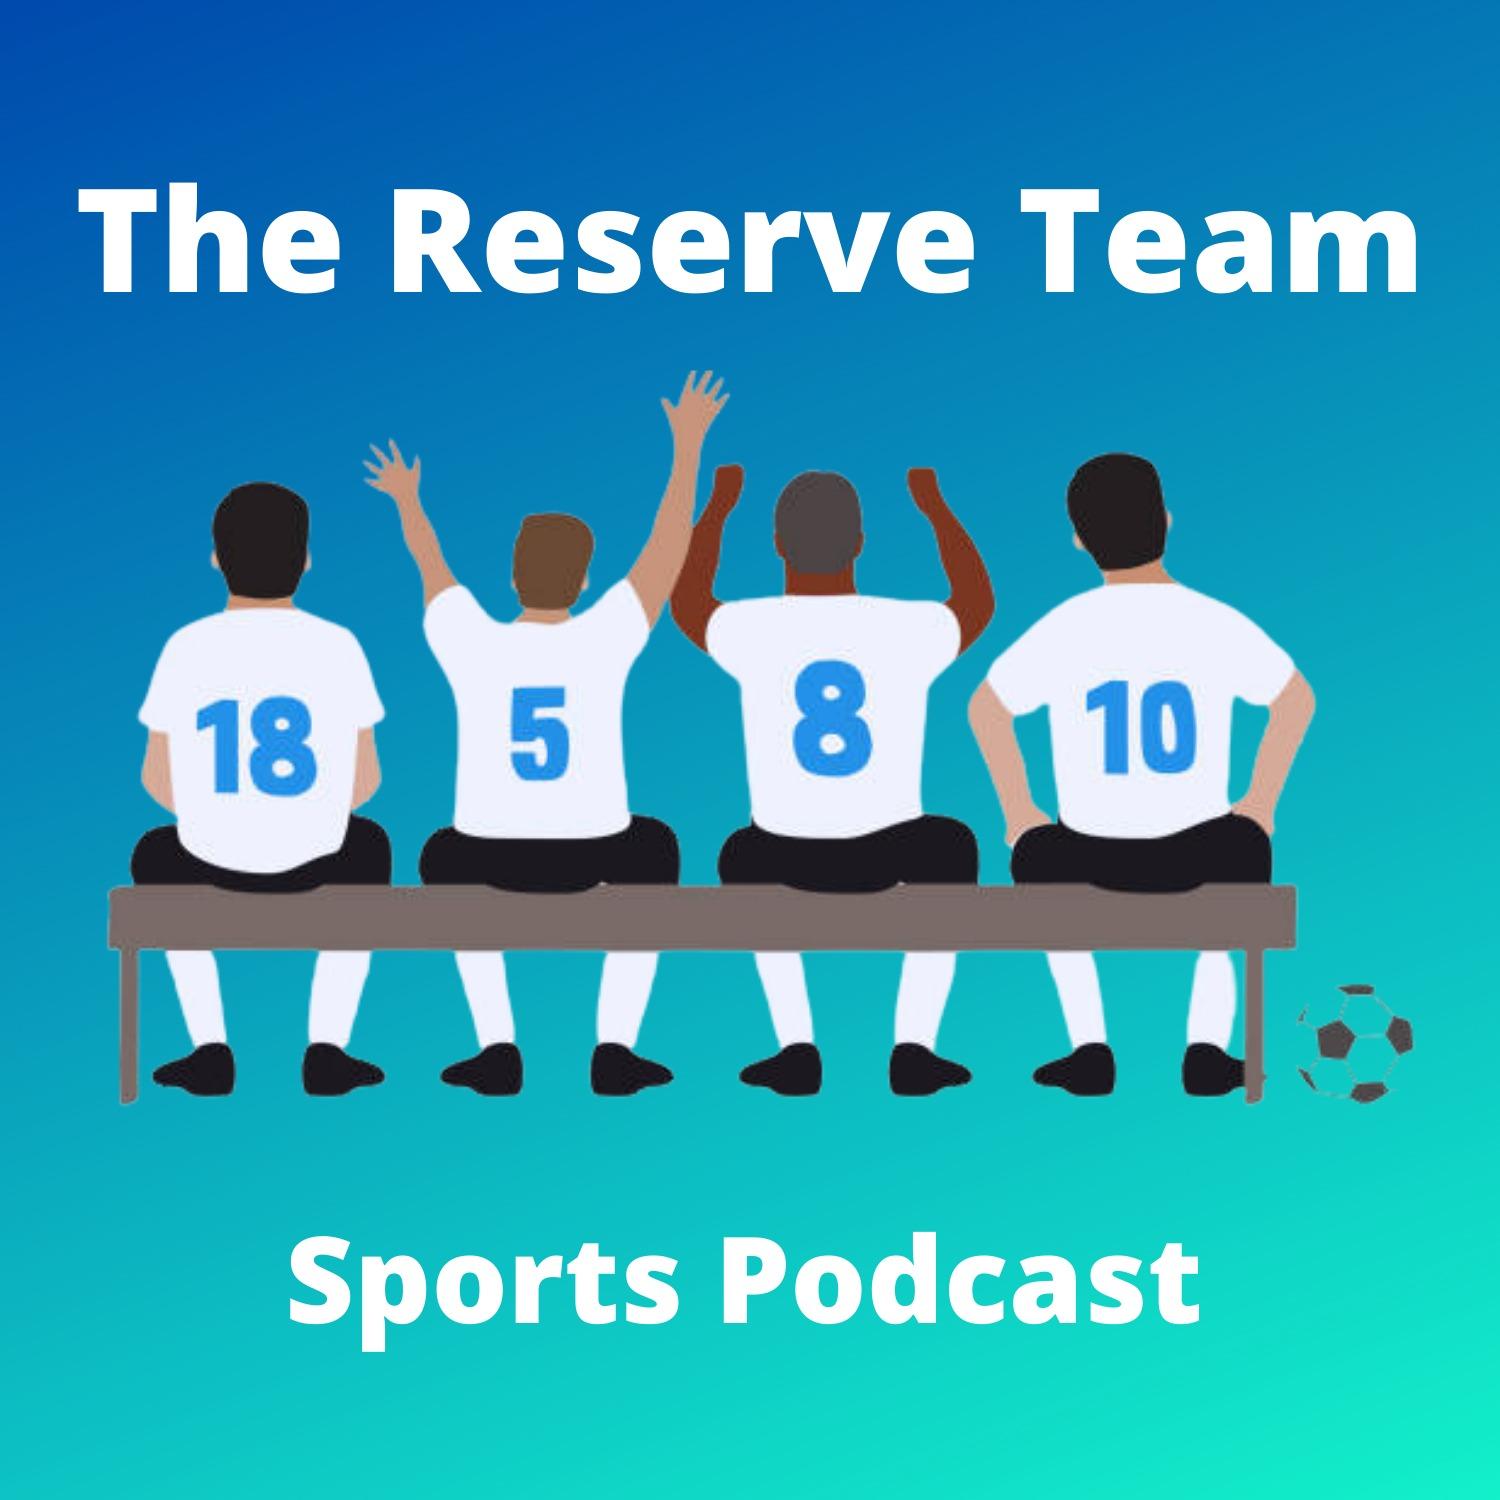 The Reserve Team